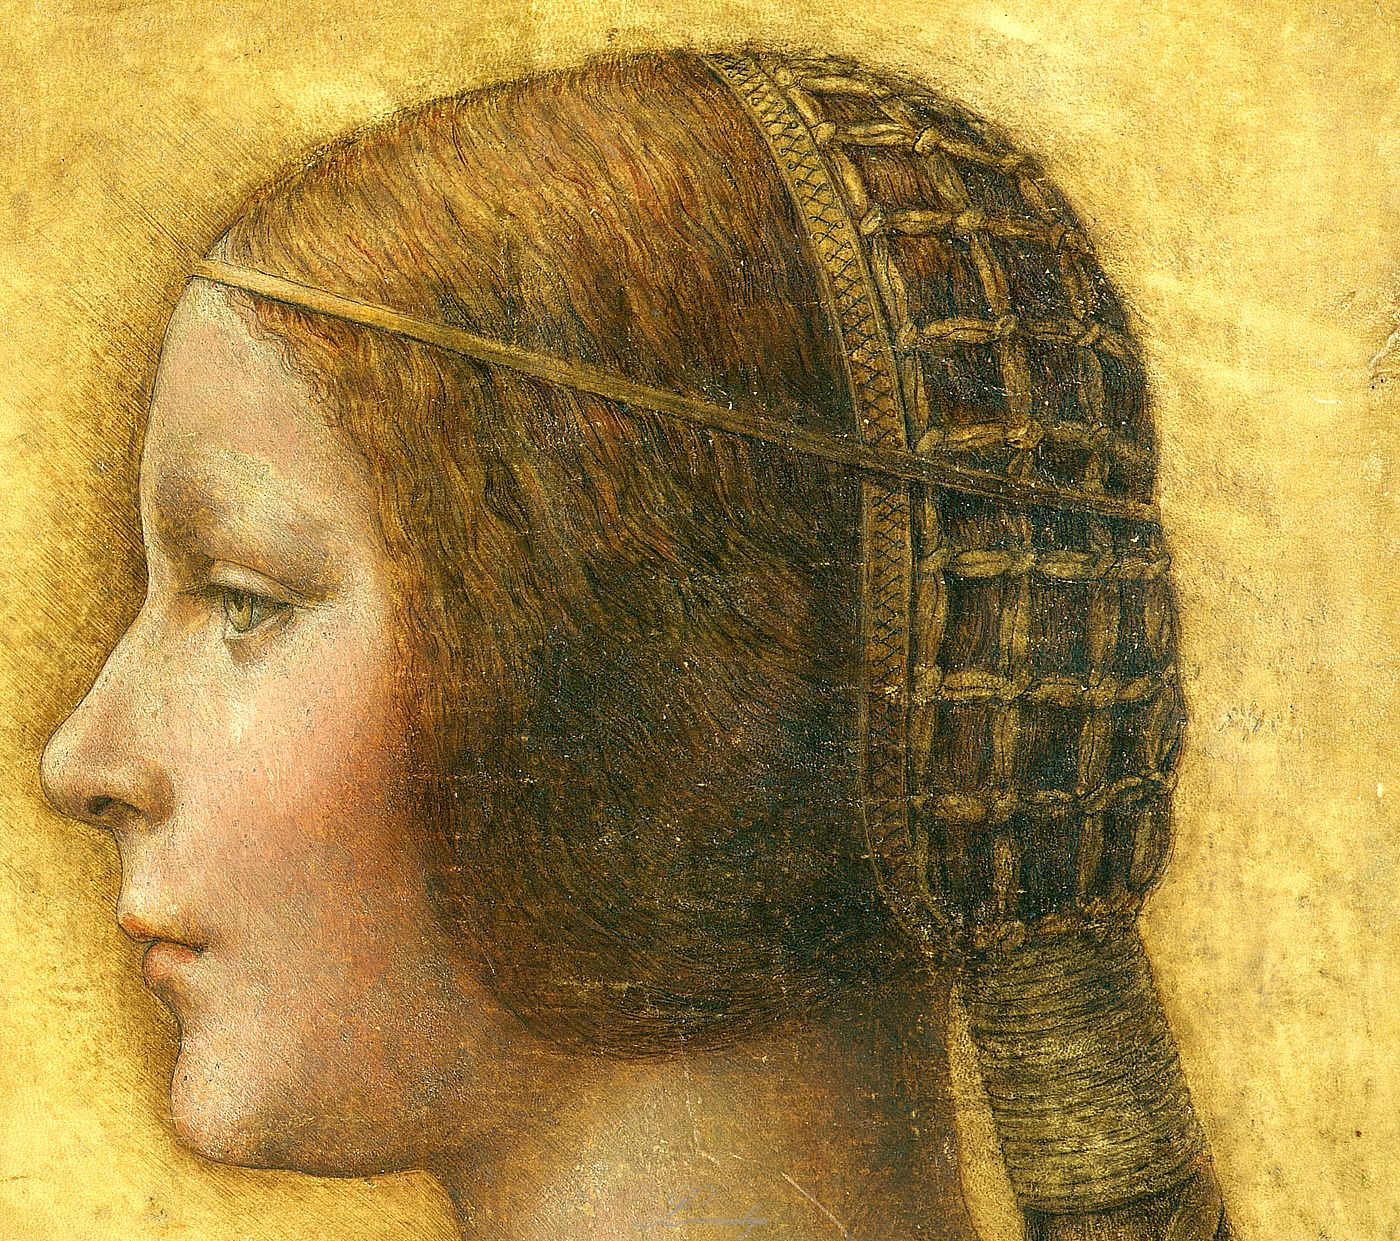 Leonardo+da+Vinci-1452-1519 (921).jpg